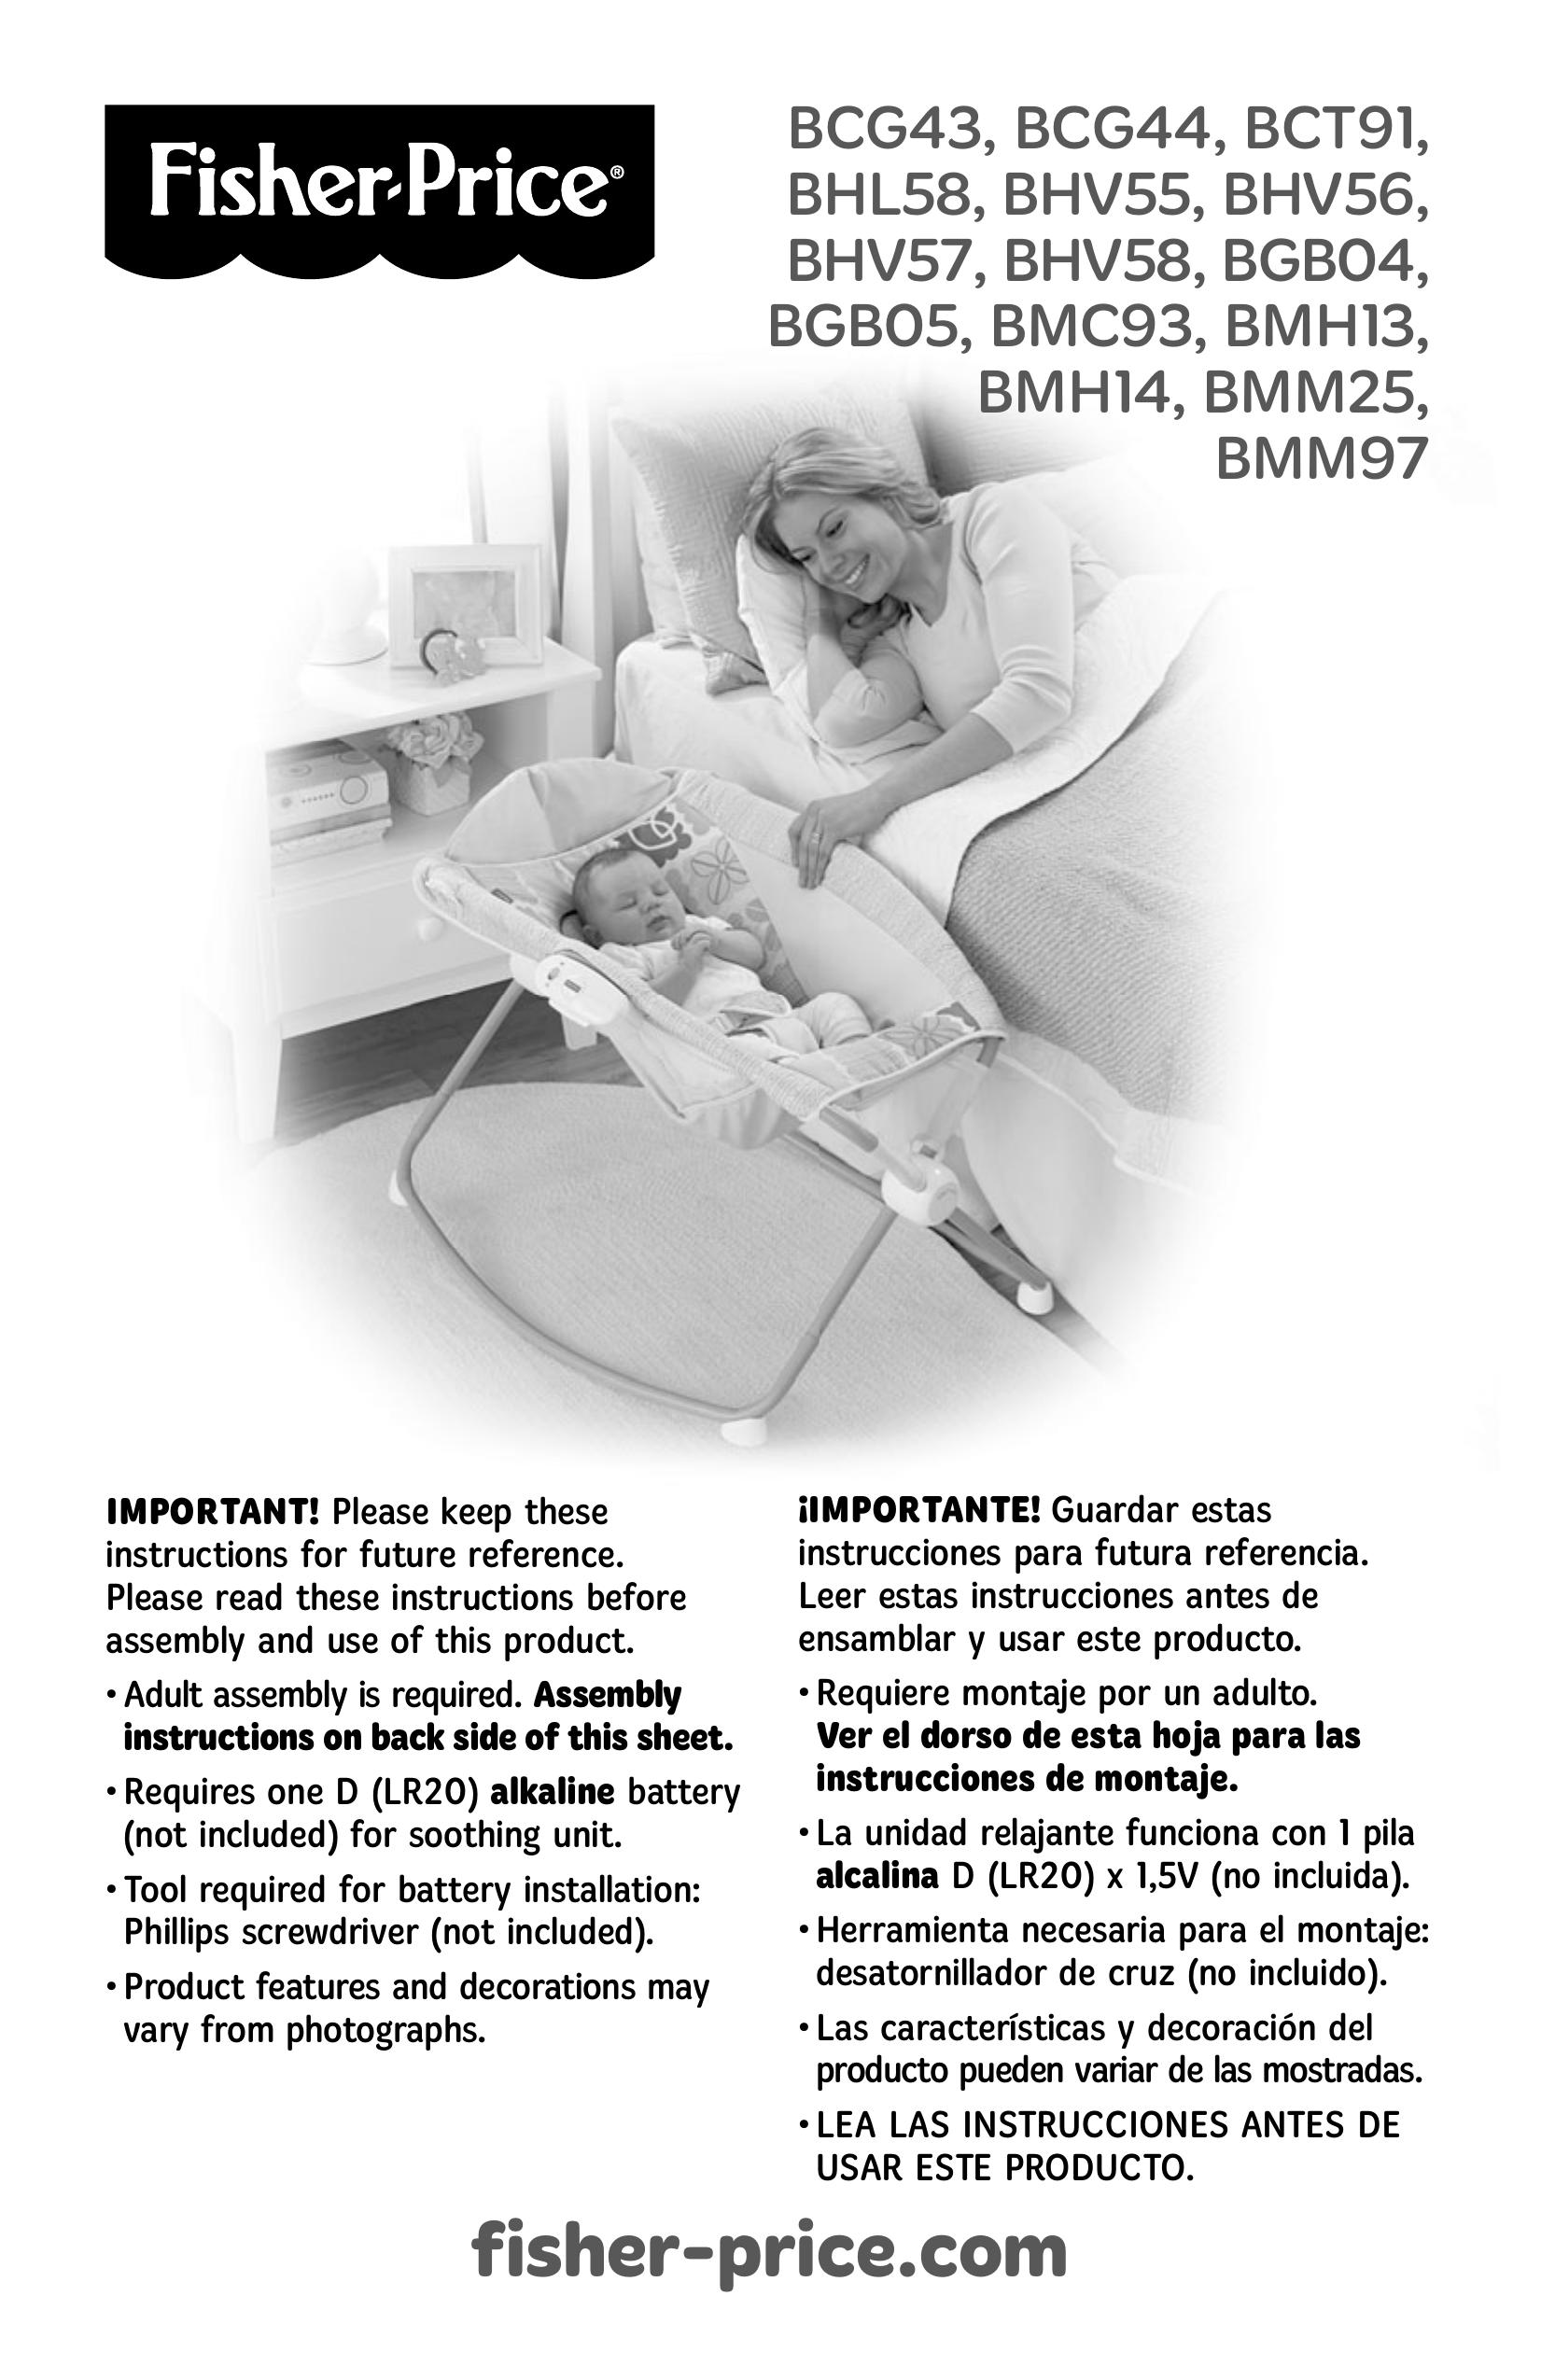 Fisher-Price BCT91 Sleep Apnea Machine User Manual